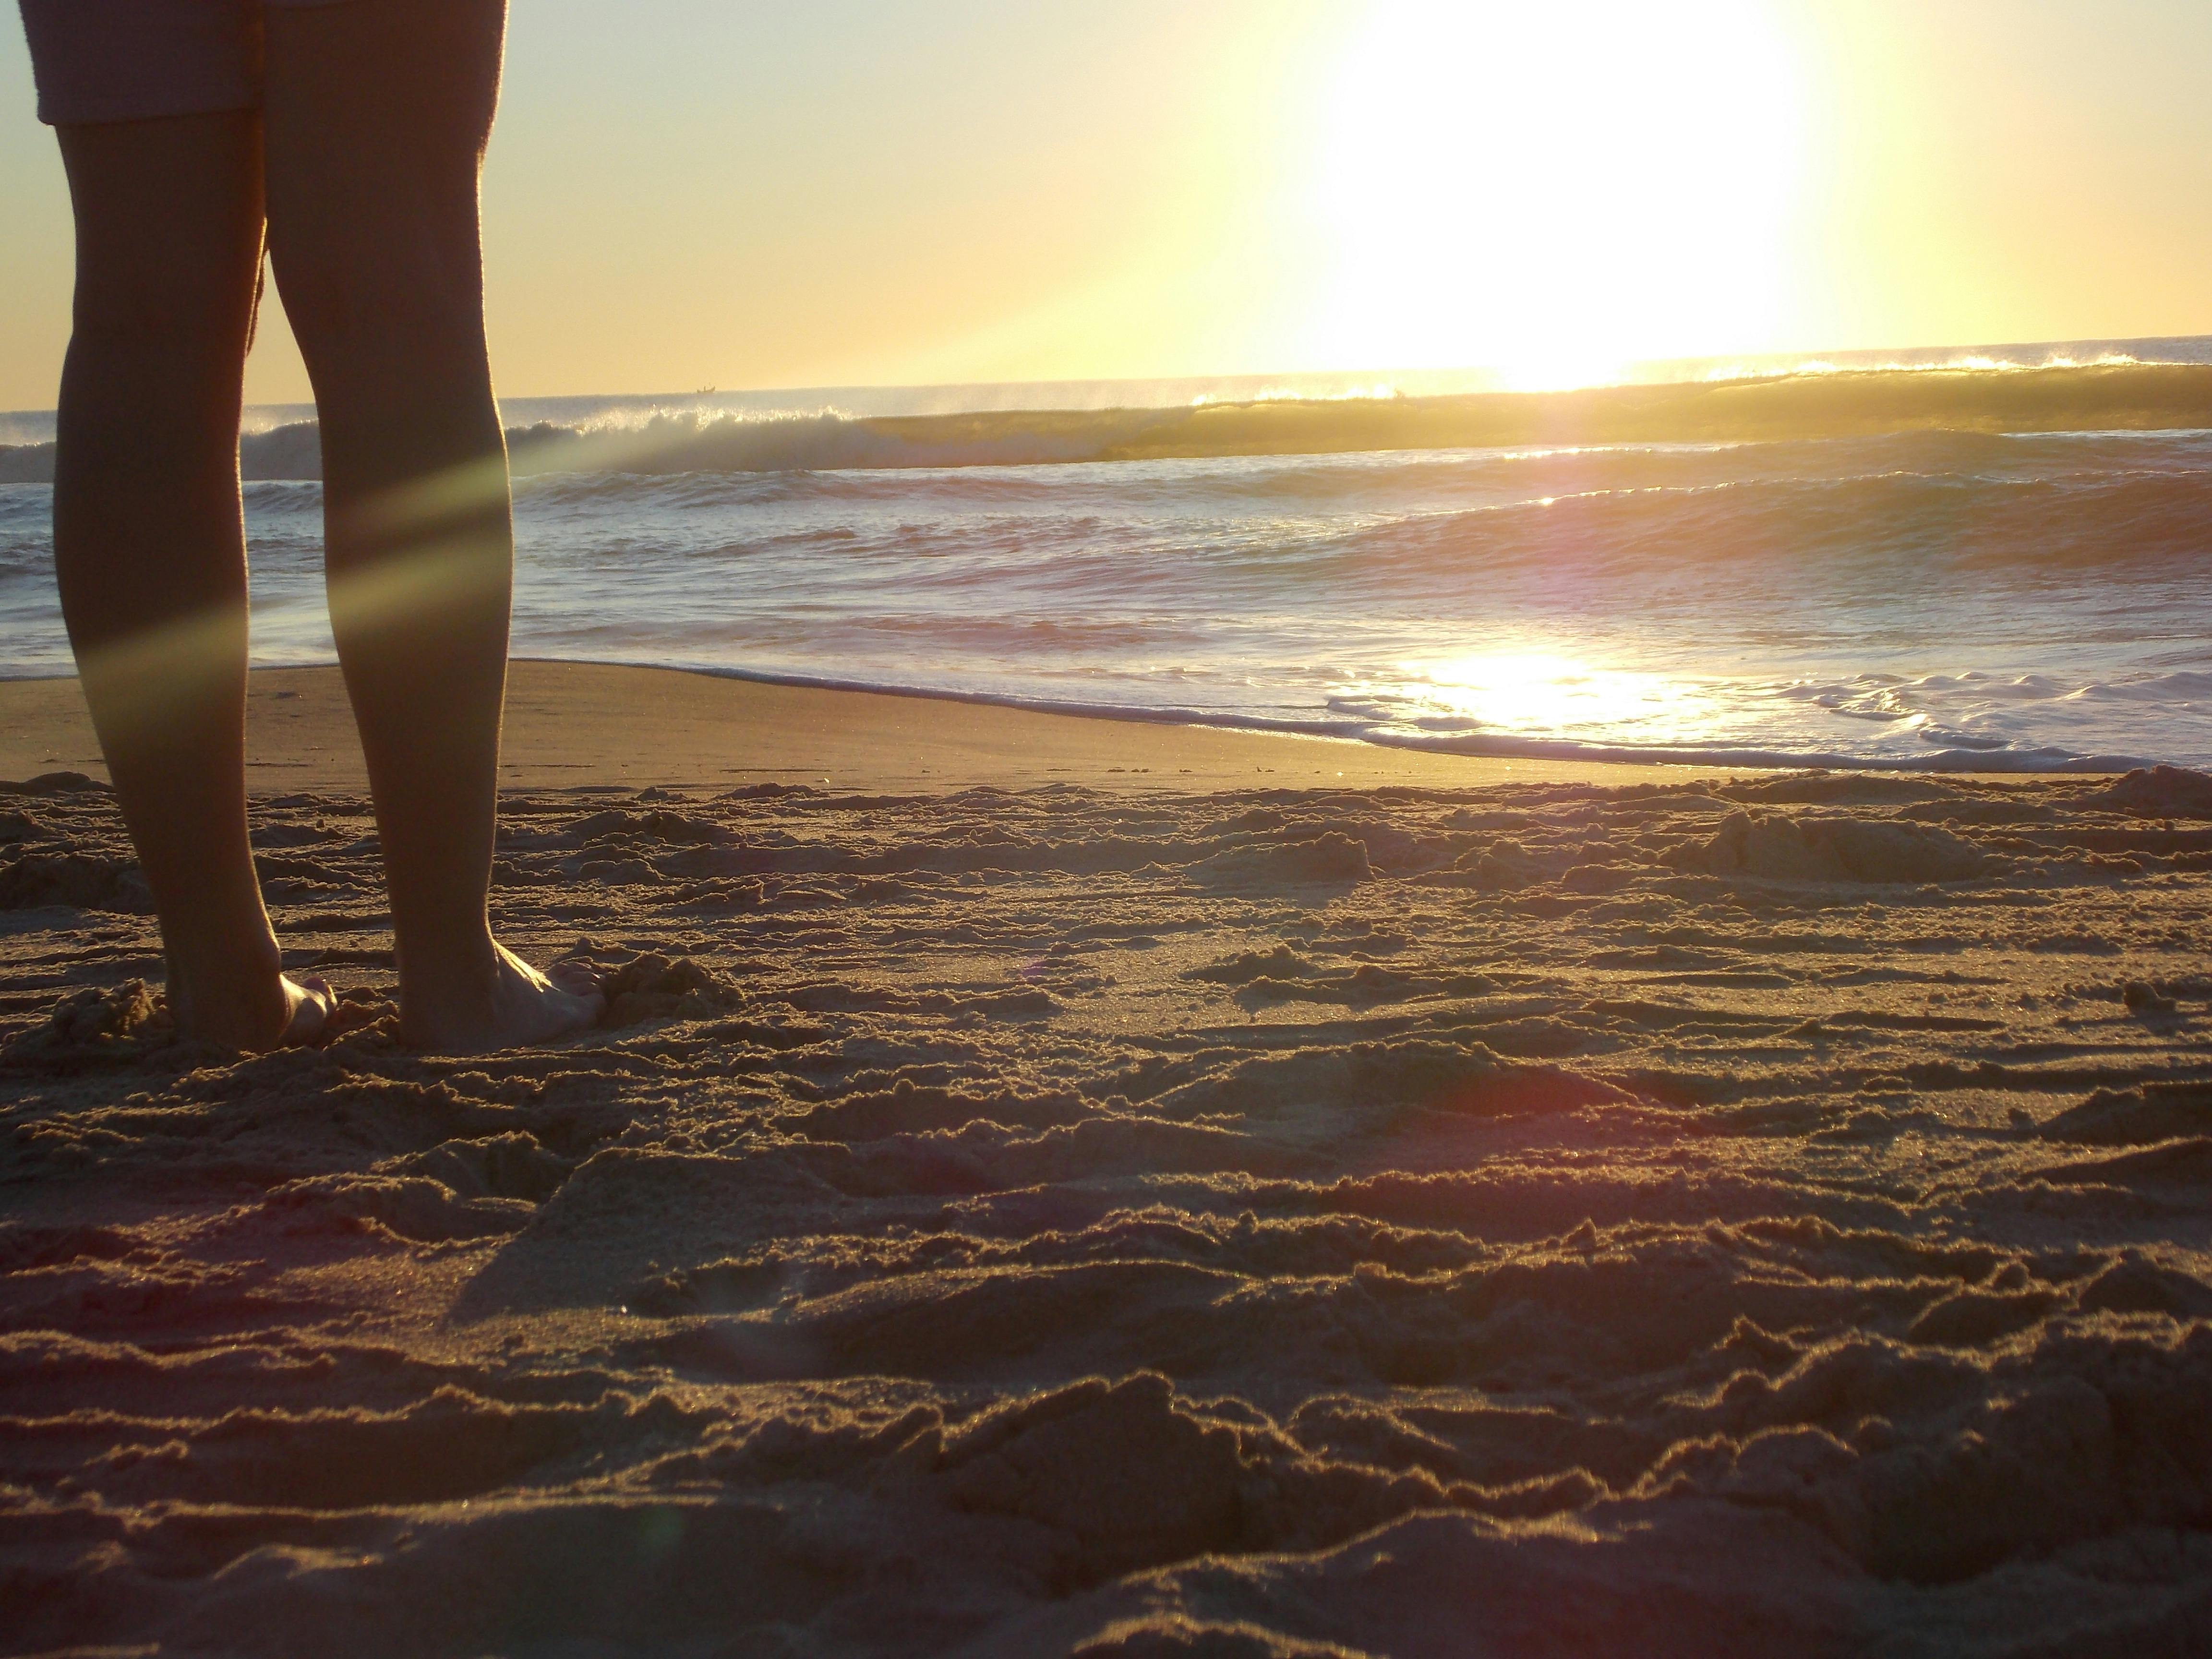 Free stock photo of Sun rising on the beach